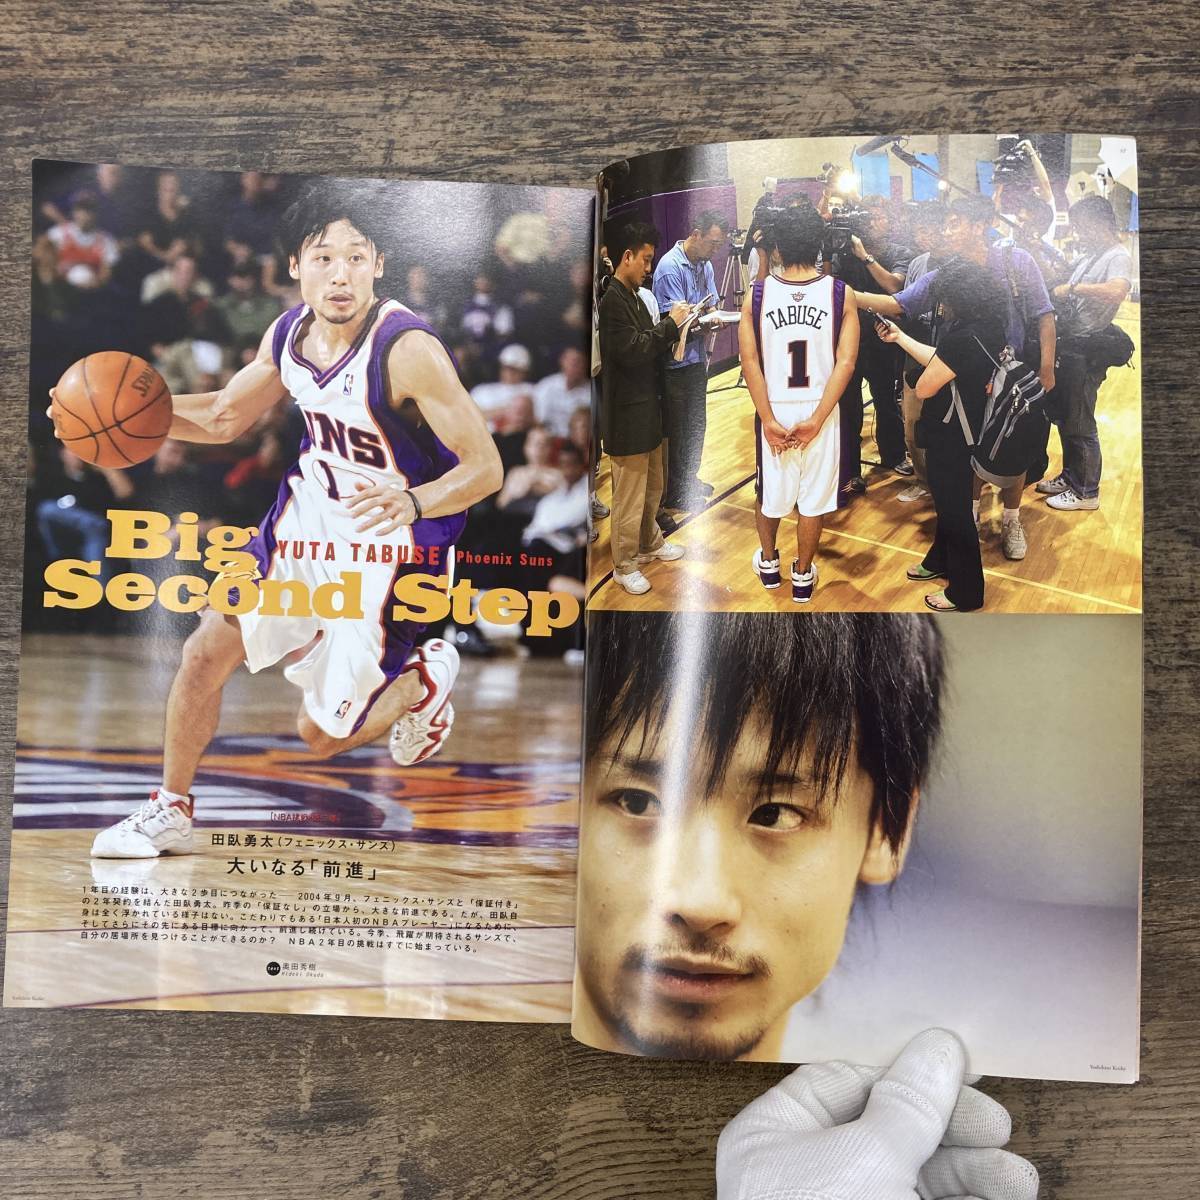 Z-338#NBA новый век vol.12 NBA Perfect гид 2004-05 (B*B MOOK 316)# баскетбол информация журнал # эпоха Heisei 16 год 11 месяц 30 день выпуск 